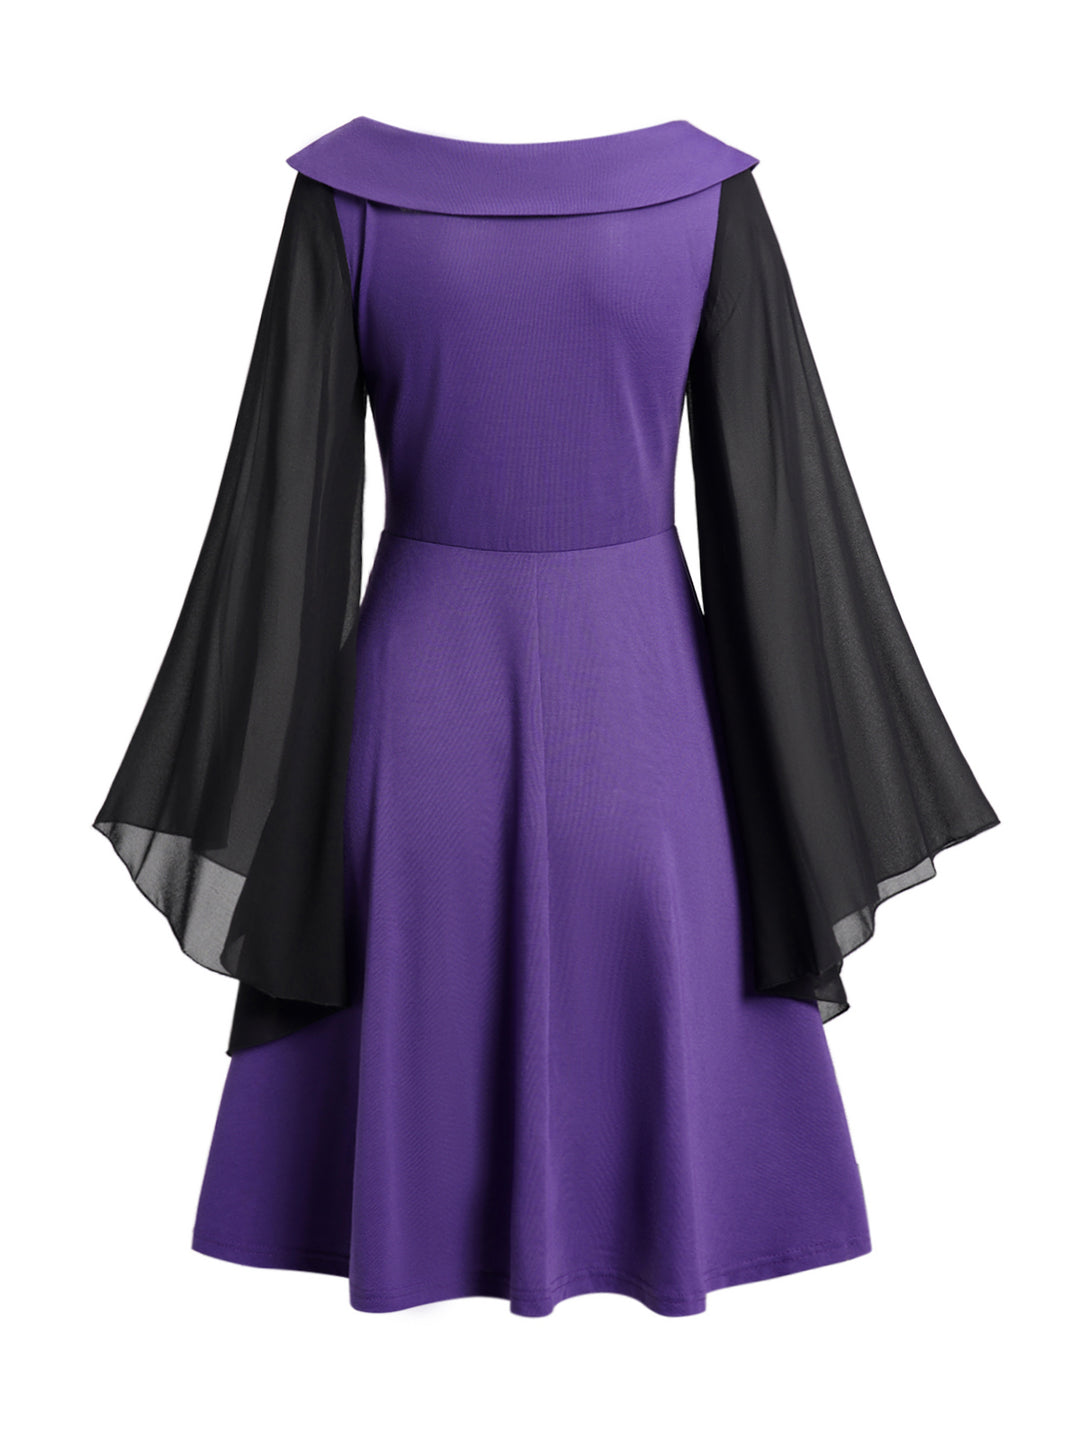 Lace Up Hasp Button Chiffon Long Sleeve Gothic Mini Dress